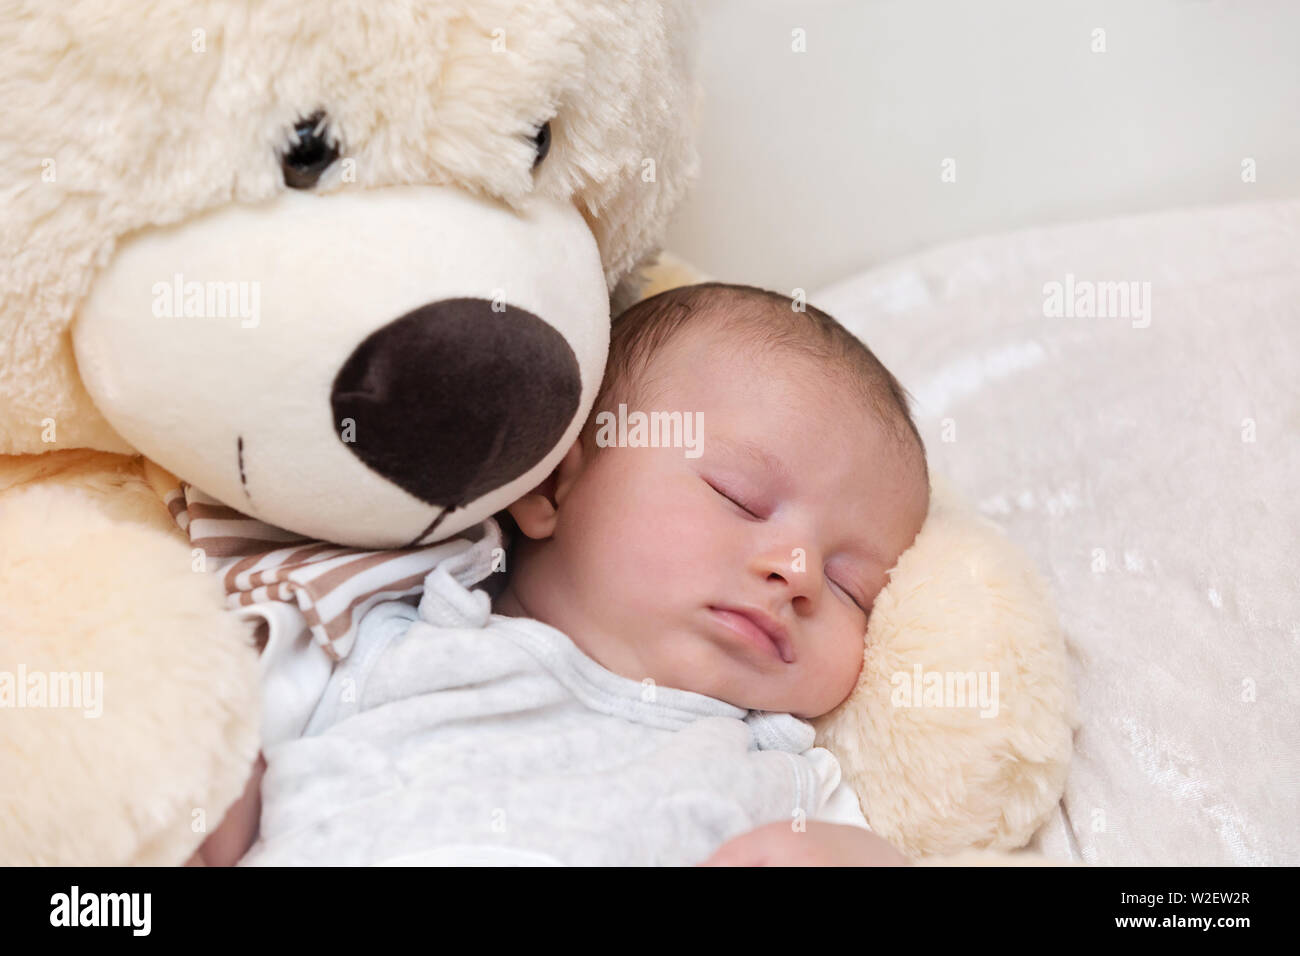 Peaceful newborn sleeping with giant fluffy teddy bear Stock Photo